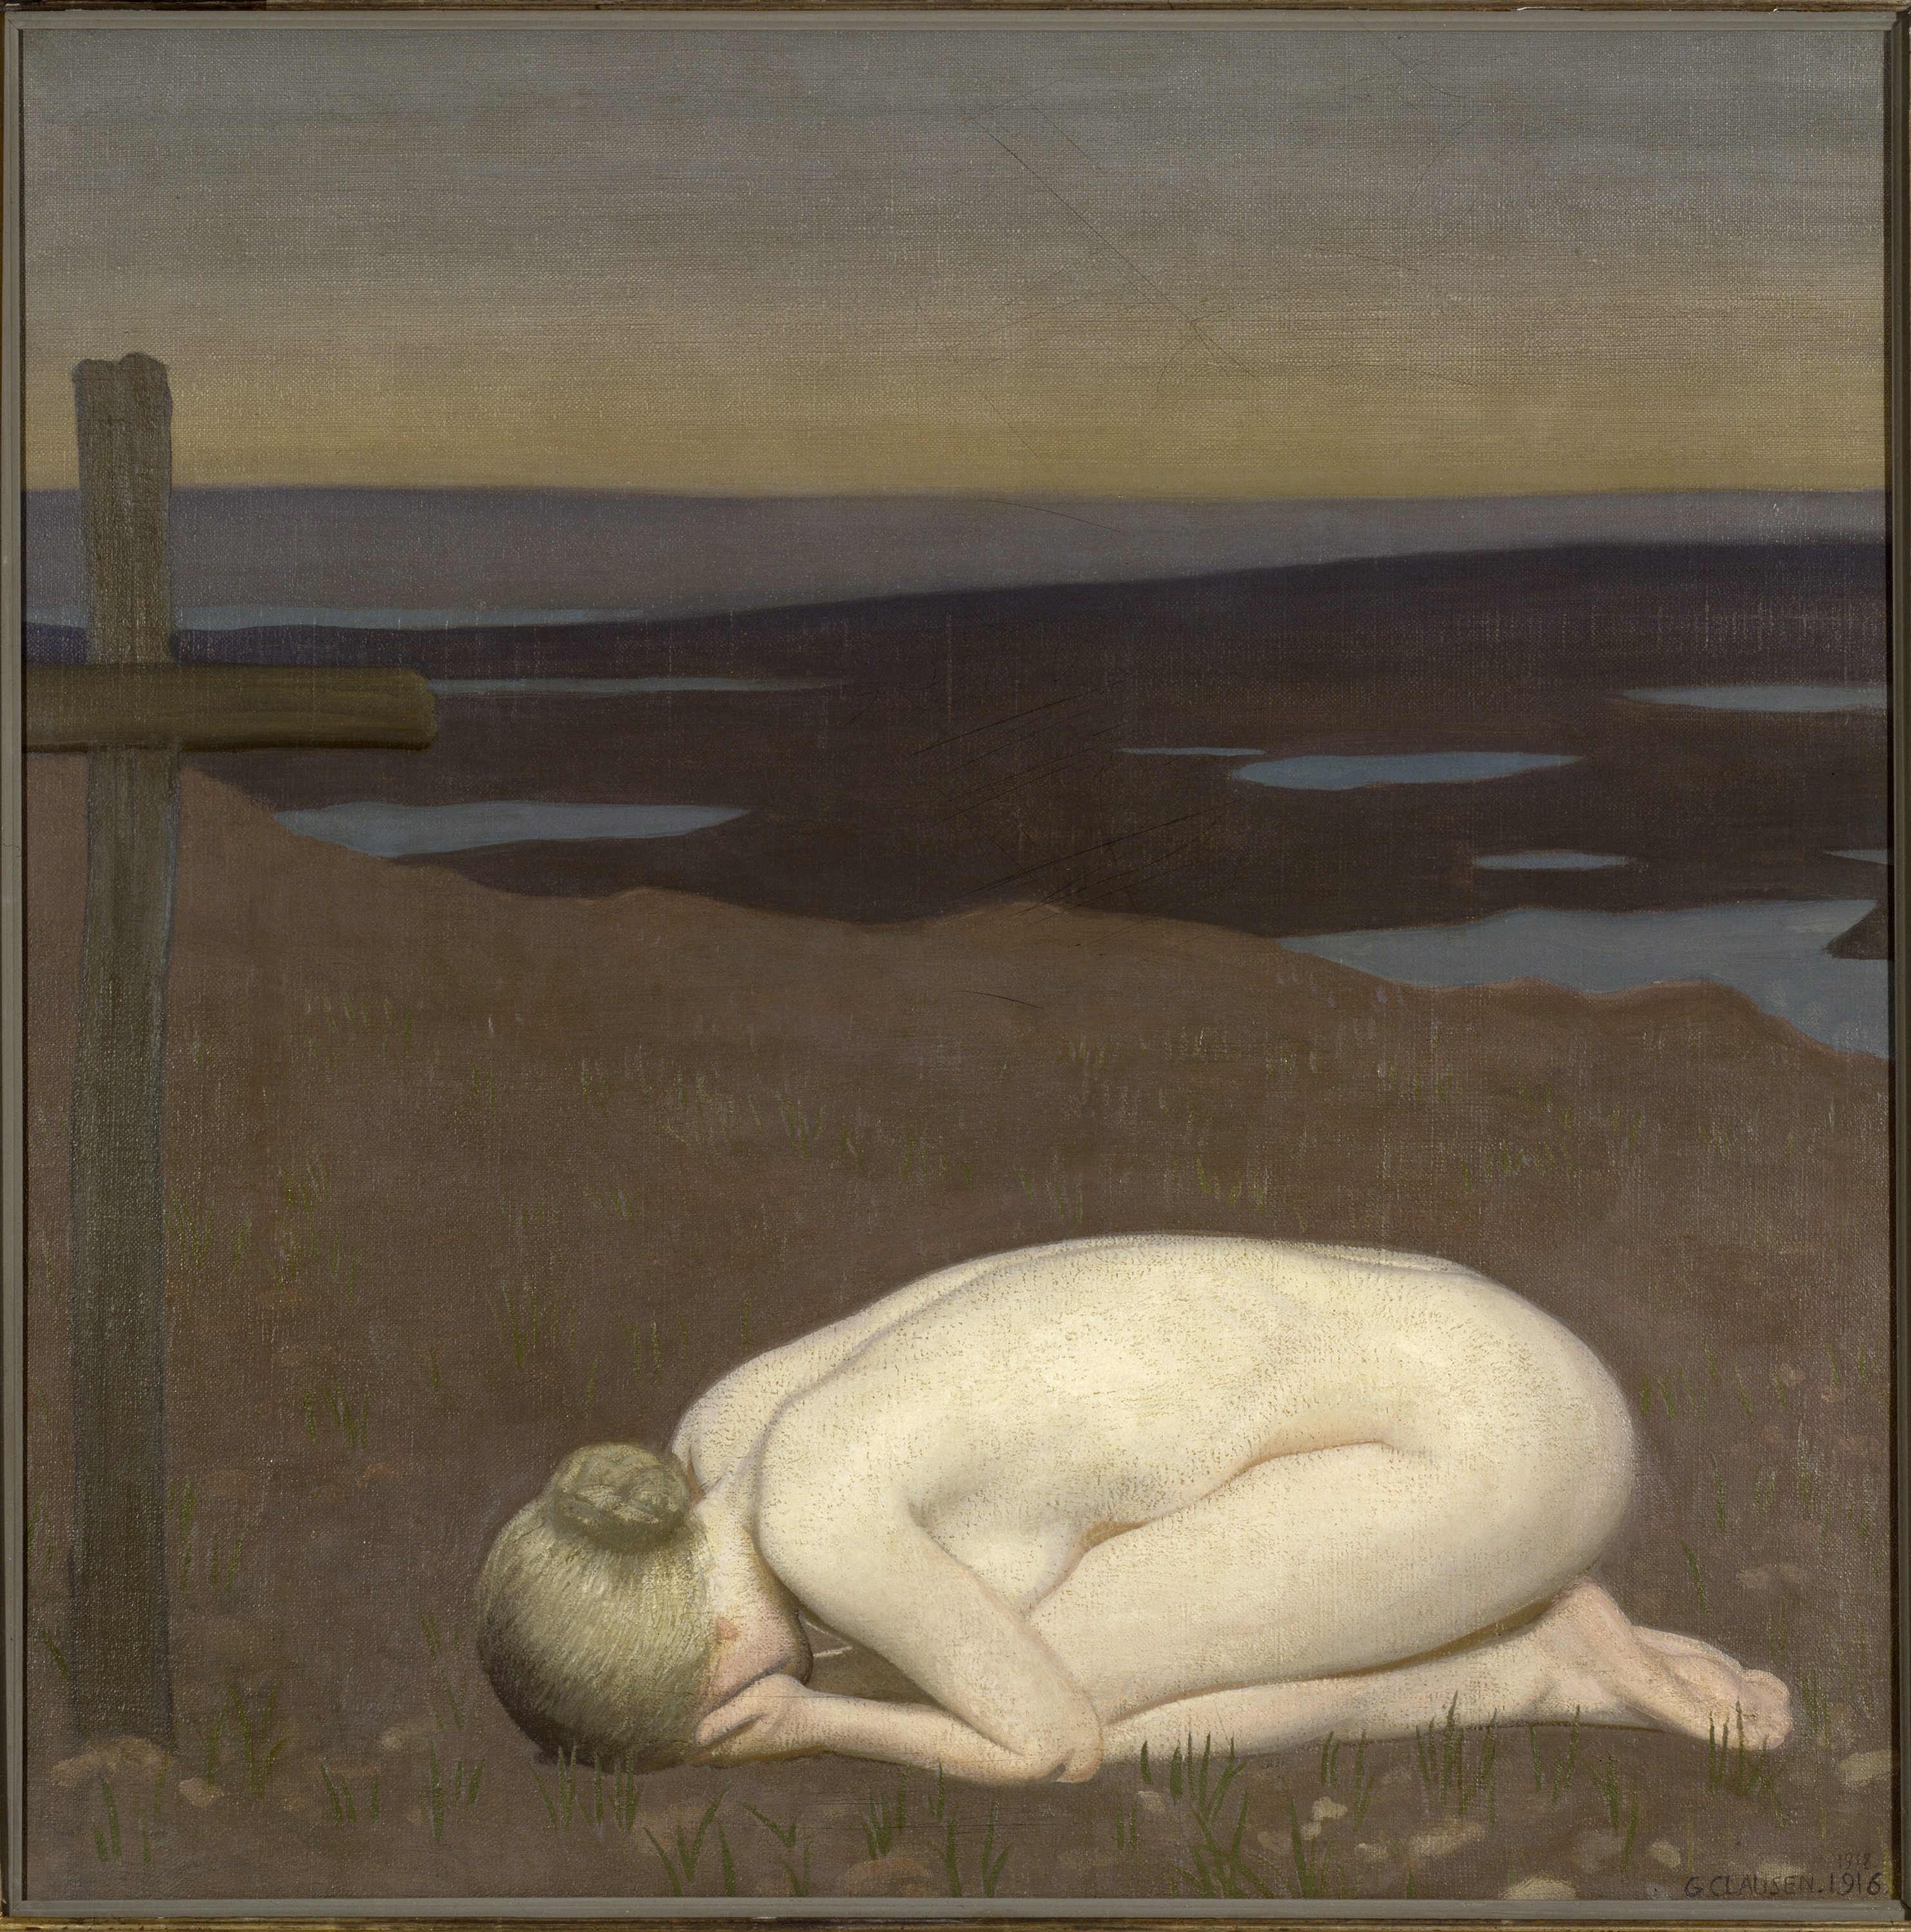 Gençliğin Yası (orig. "Youth Mourning") by George Clausen - 1916 - 91.4 x 91.4 cm 